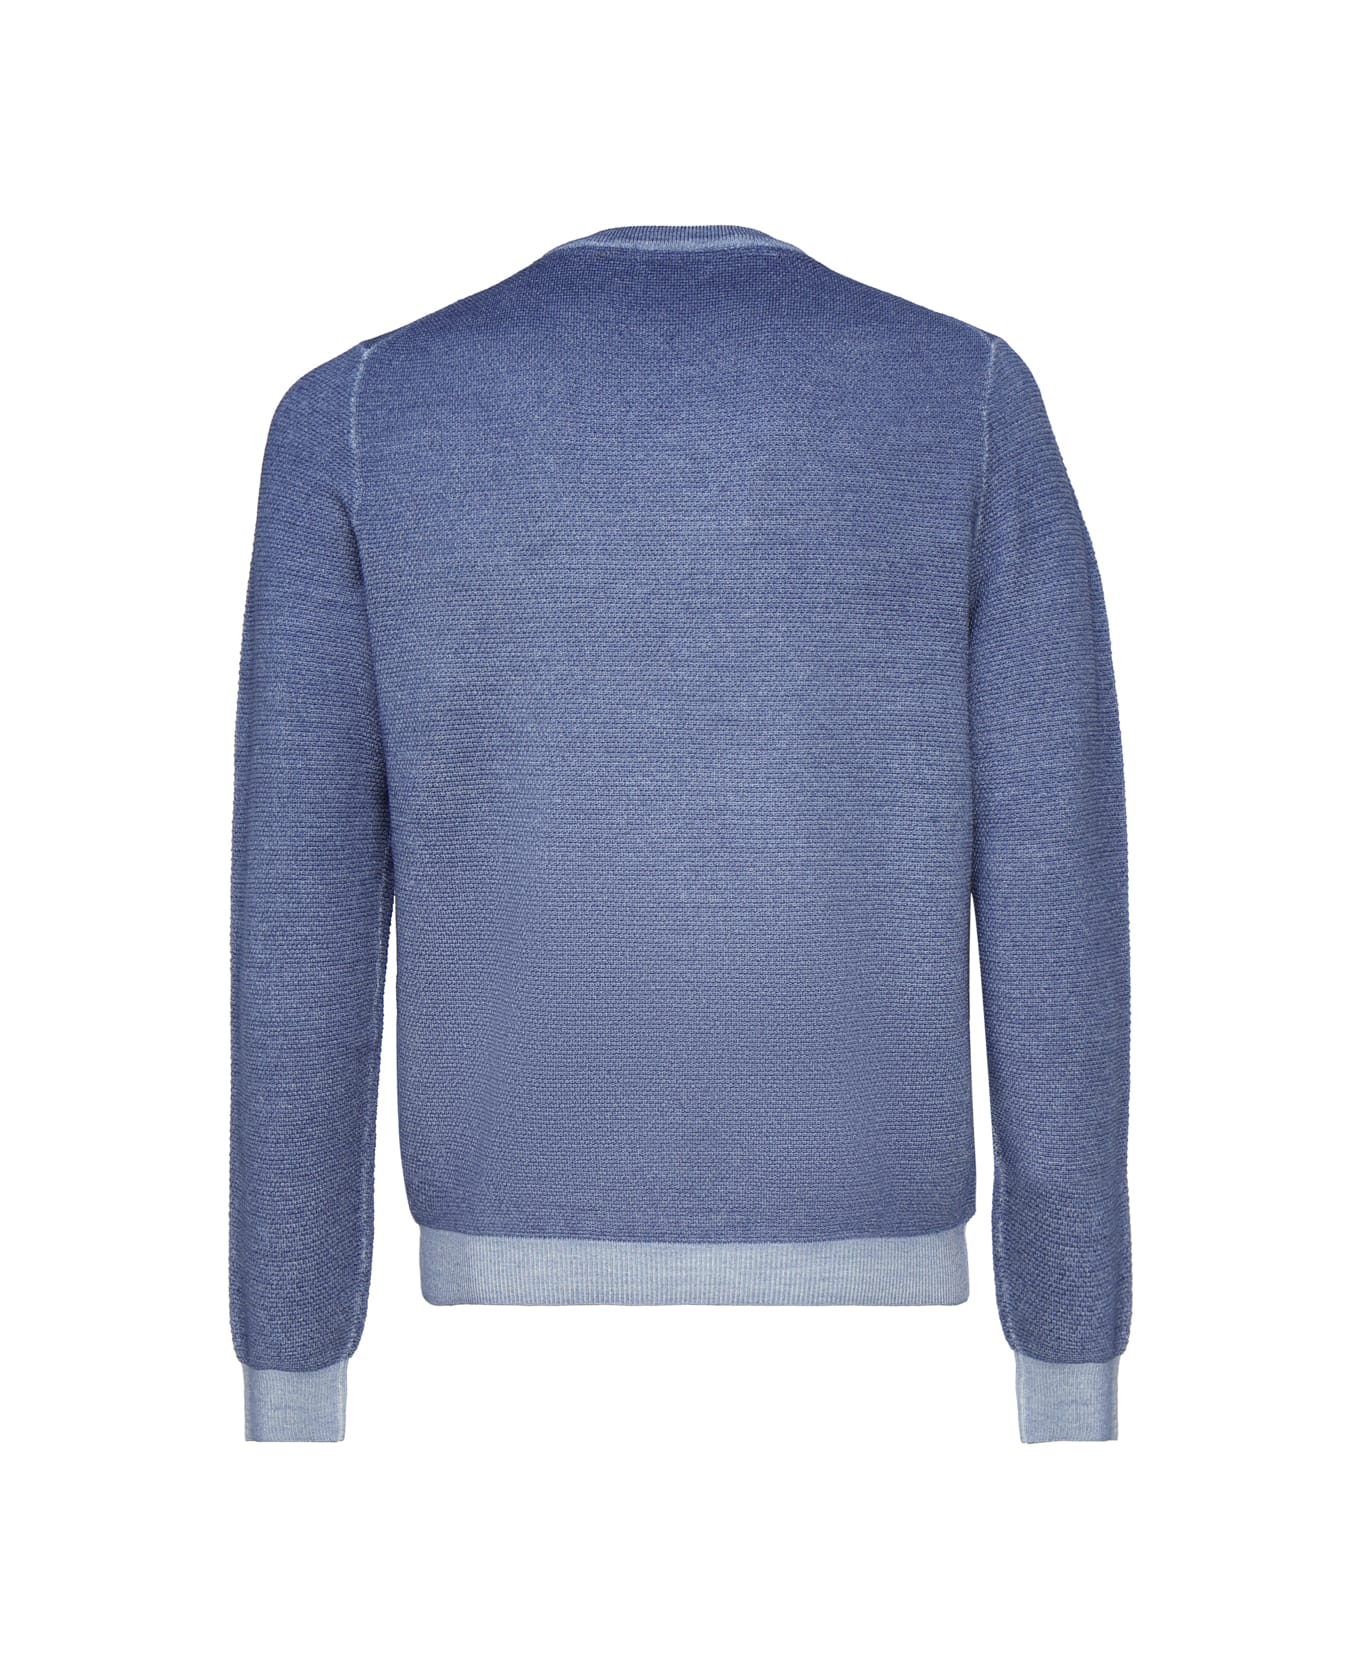 Sun 68 Vintage Round Sweater - Light blue フリース